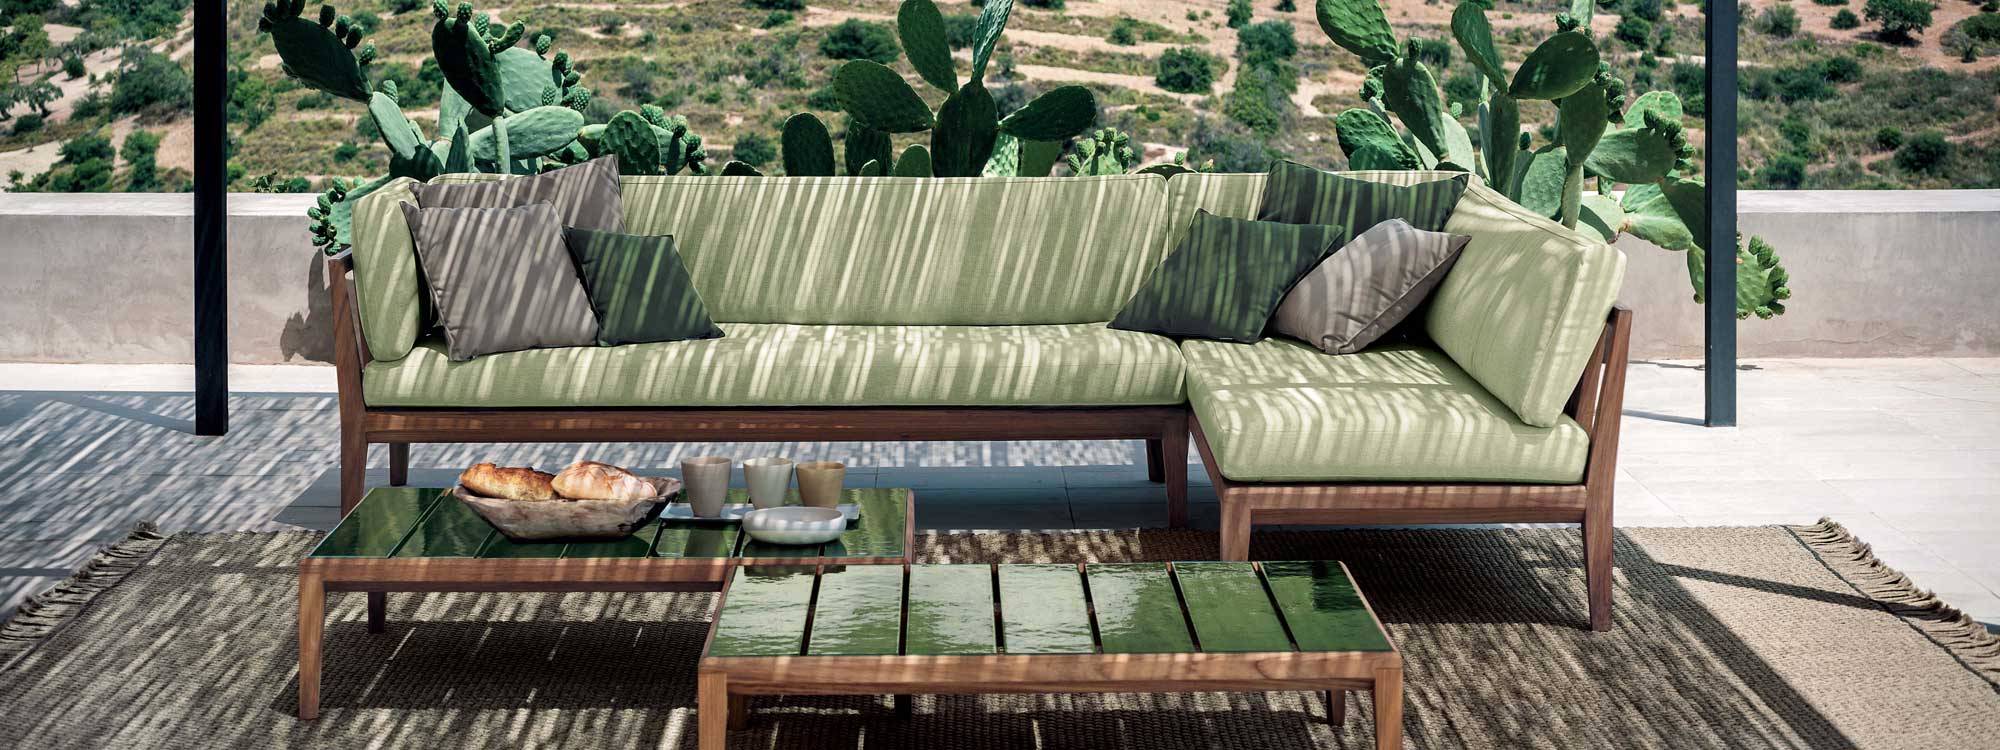 Image of RODA Teka teak corner sofa with light green cushions beneath pergola, with cactuses and arid countryside in background